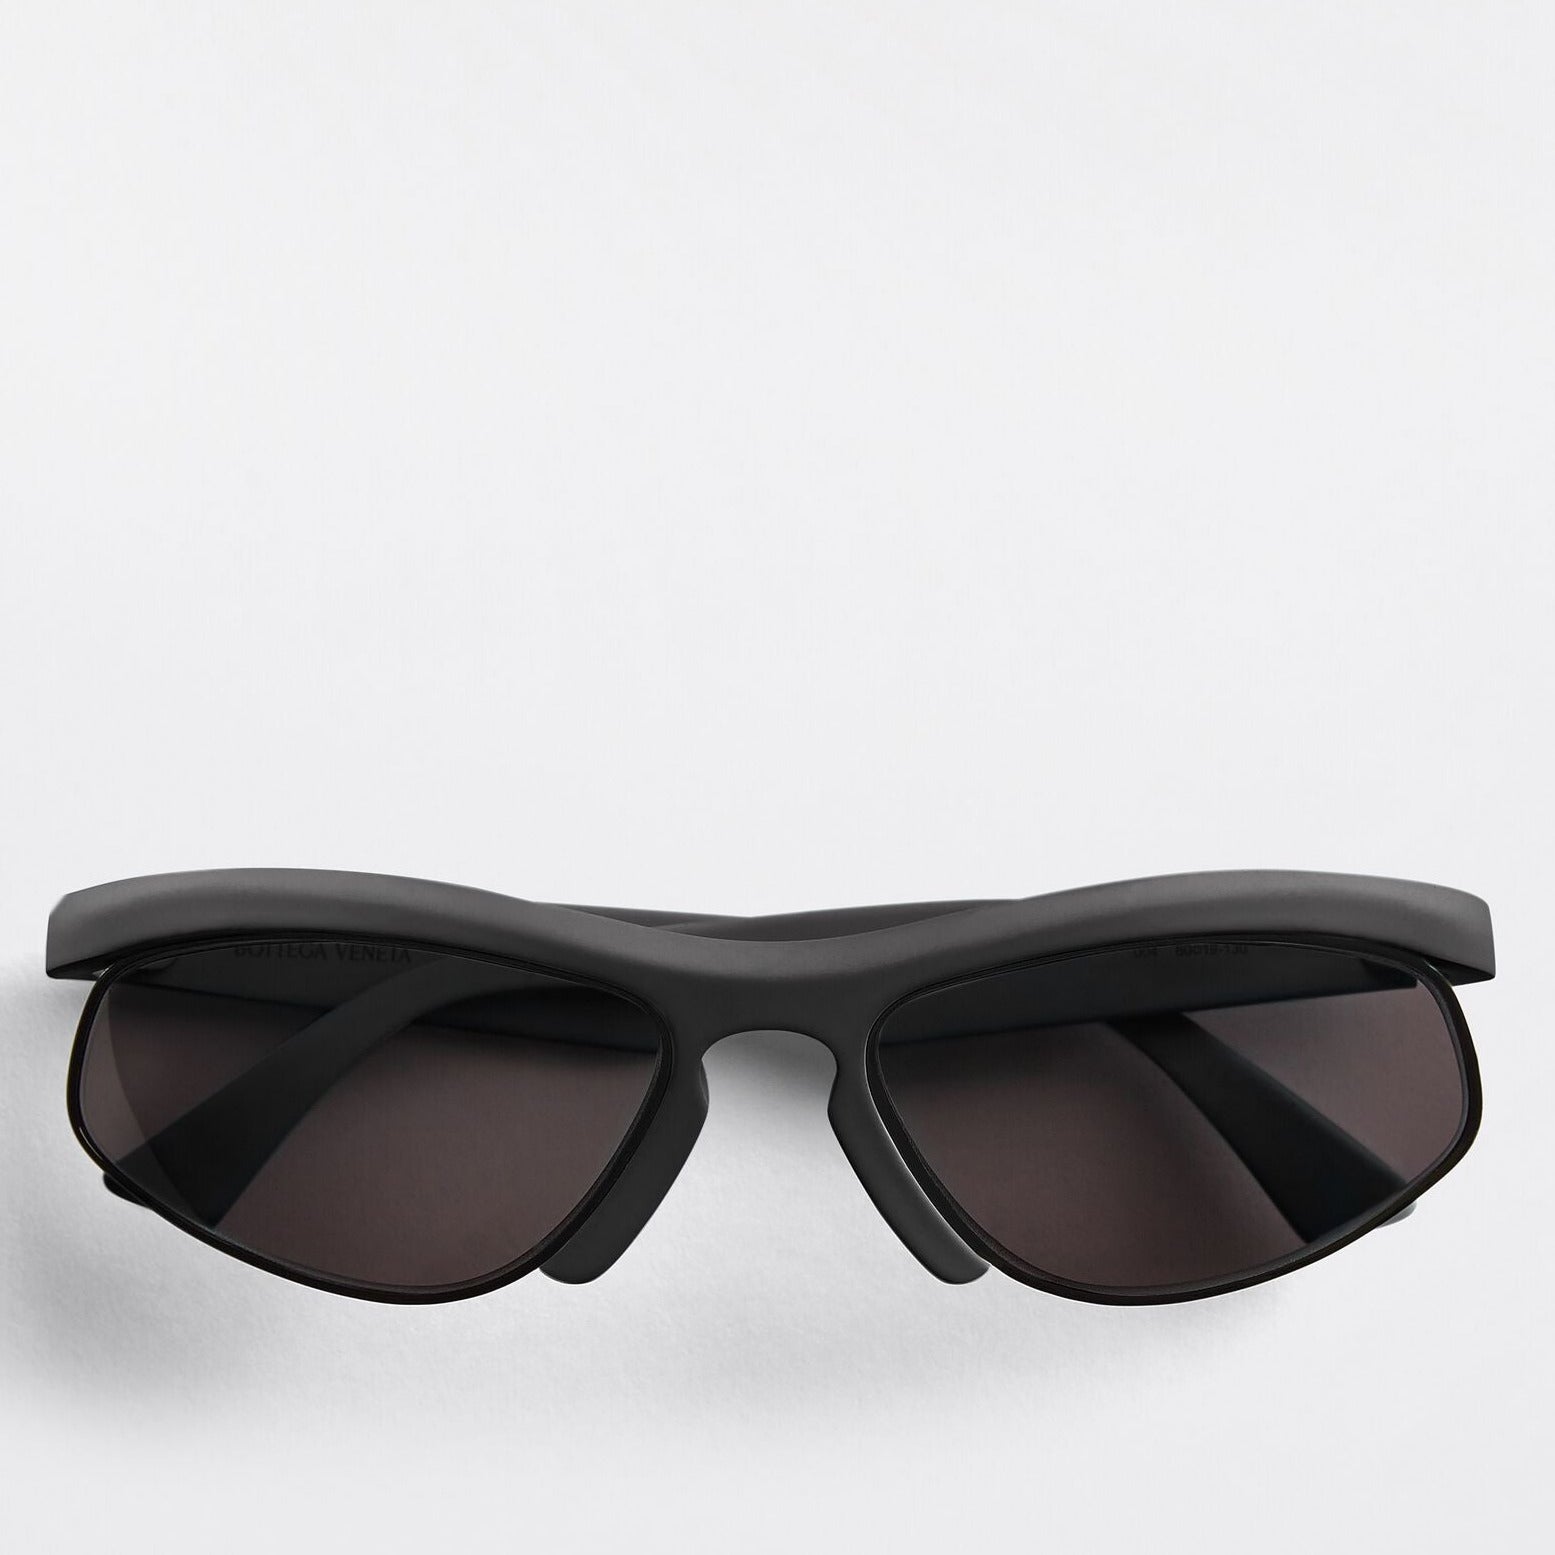 Silver Skin oval acetate sunglasses